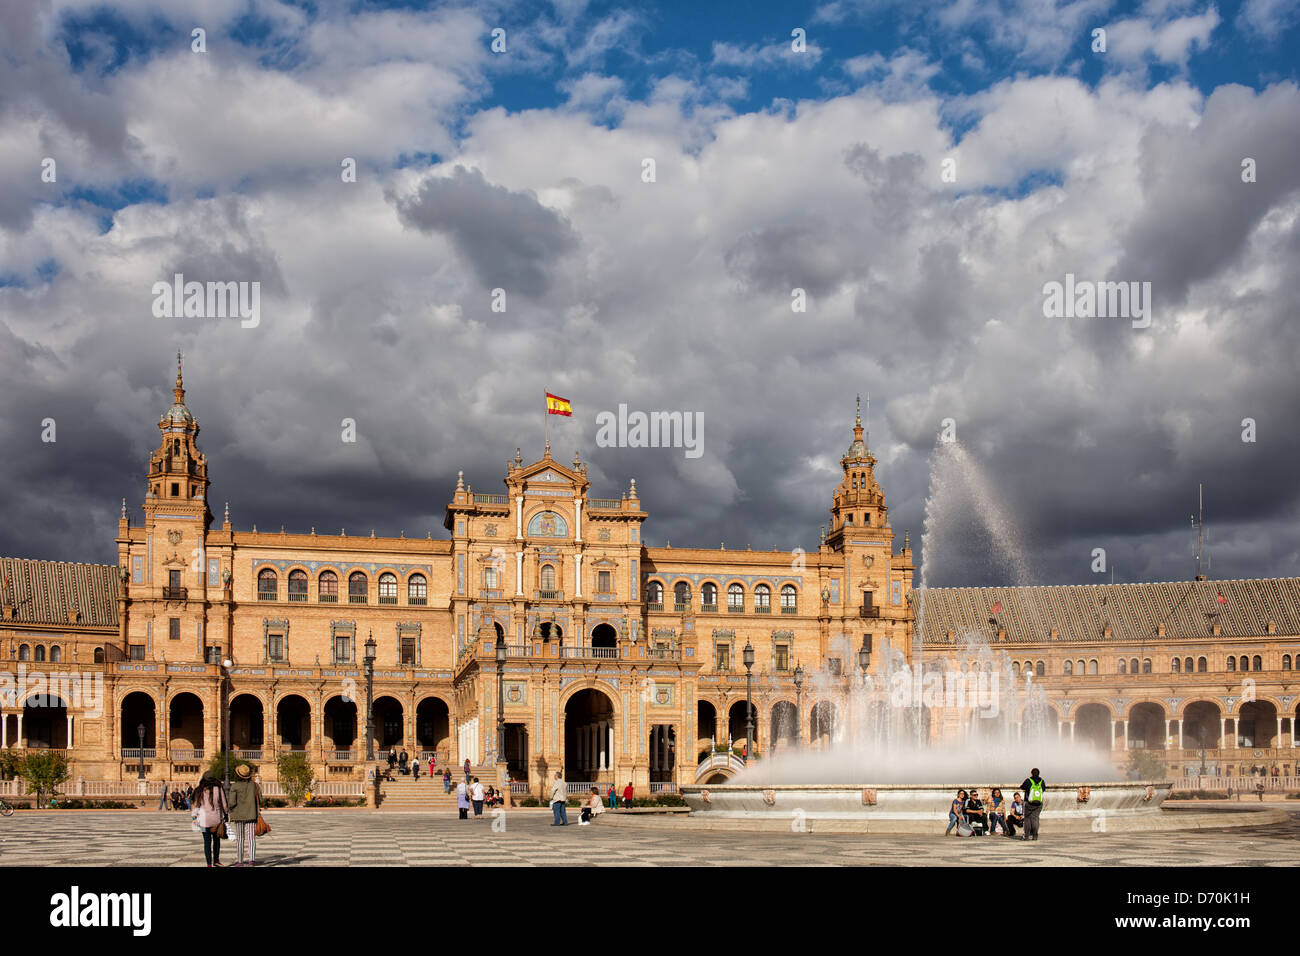 Plaza de España (spanische Quadrat) Neorenaissance Stil Pavillon und Brunnen in Sevilla, Andalusien, Spanien. Stockfoto